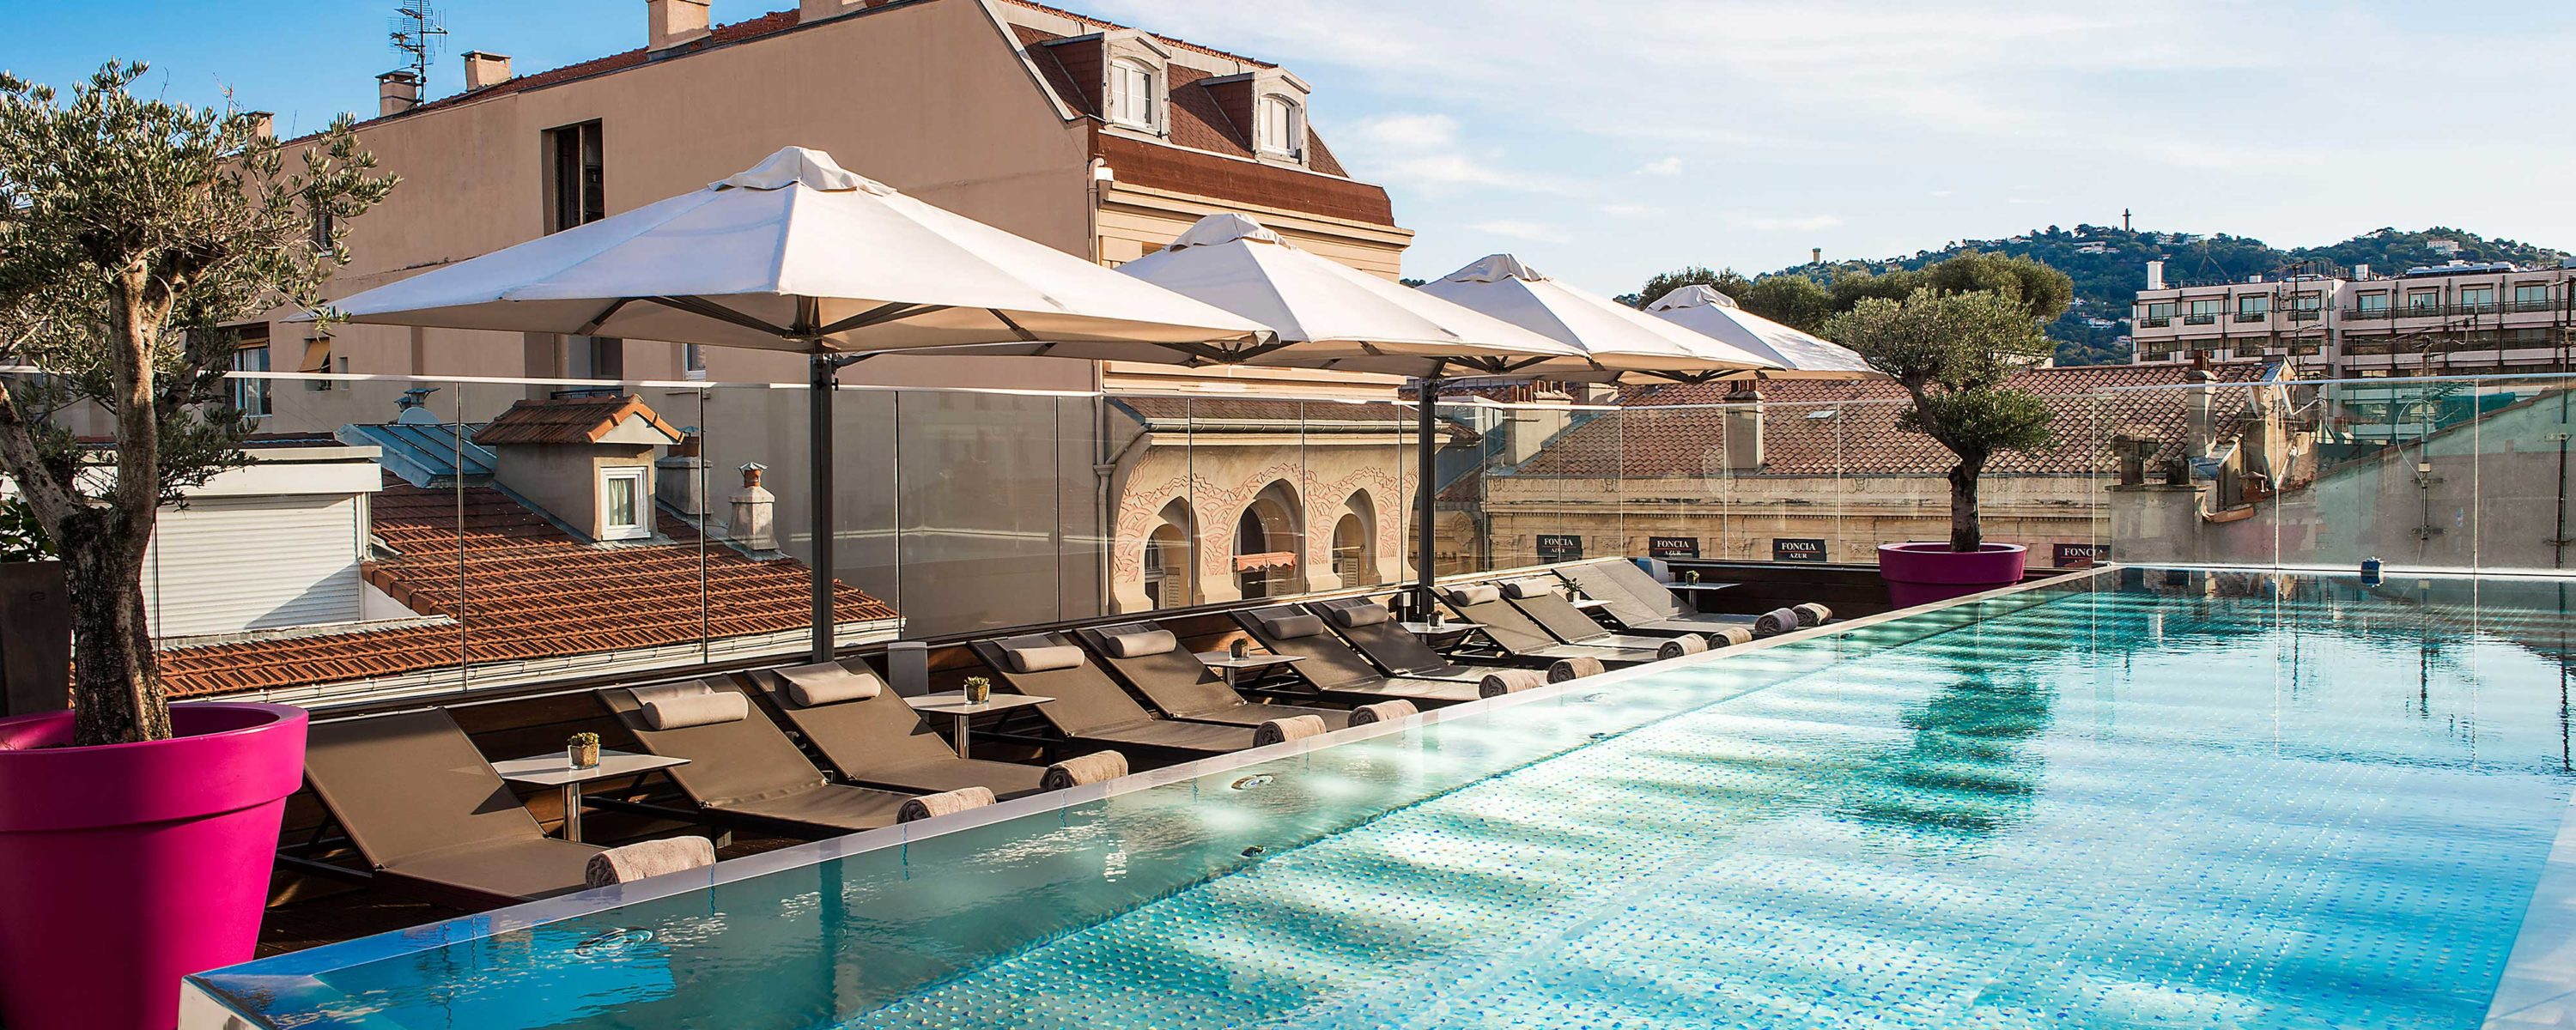 Five Seas Hotel Cannes, a Member of Design Hotels™